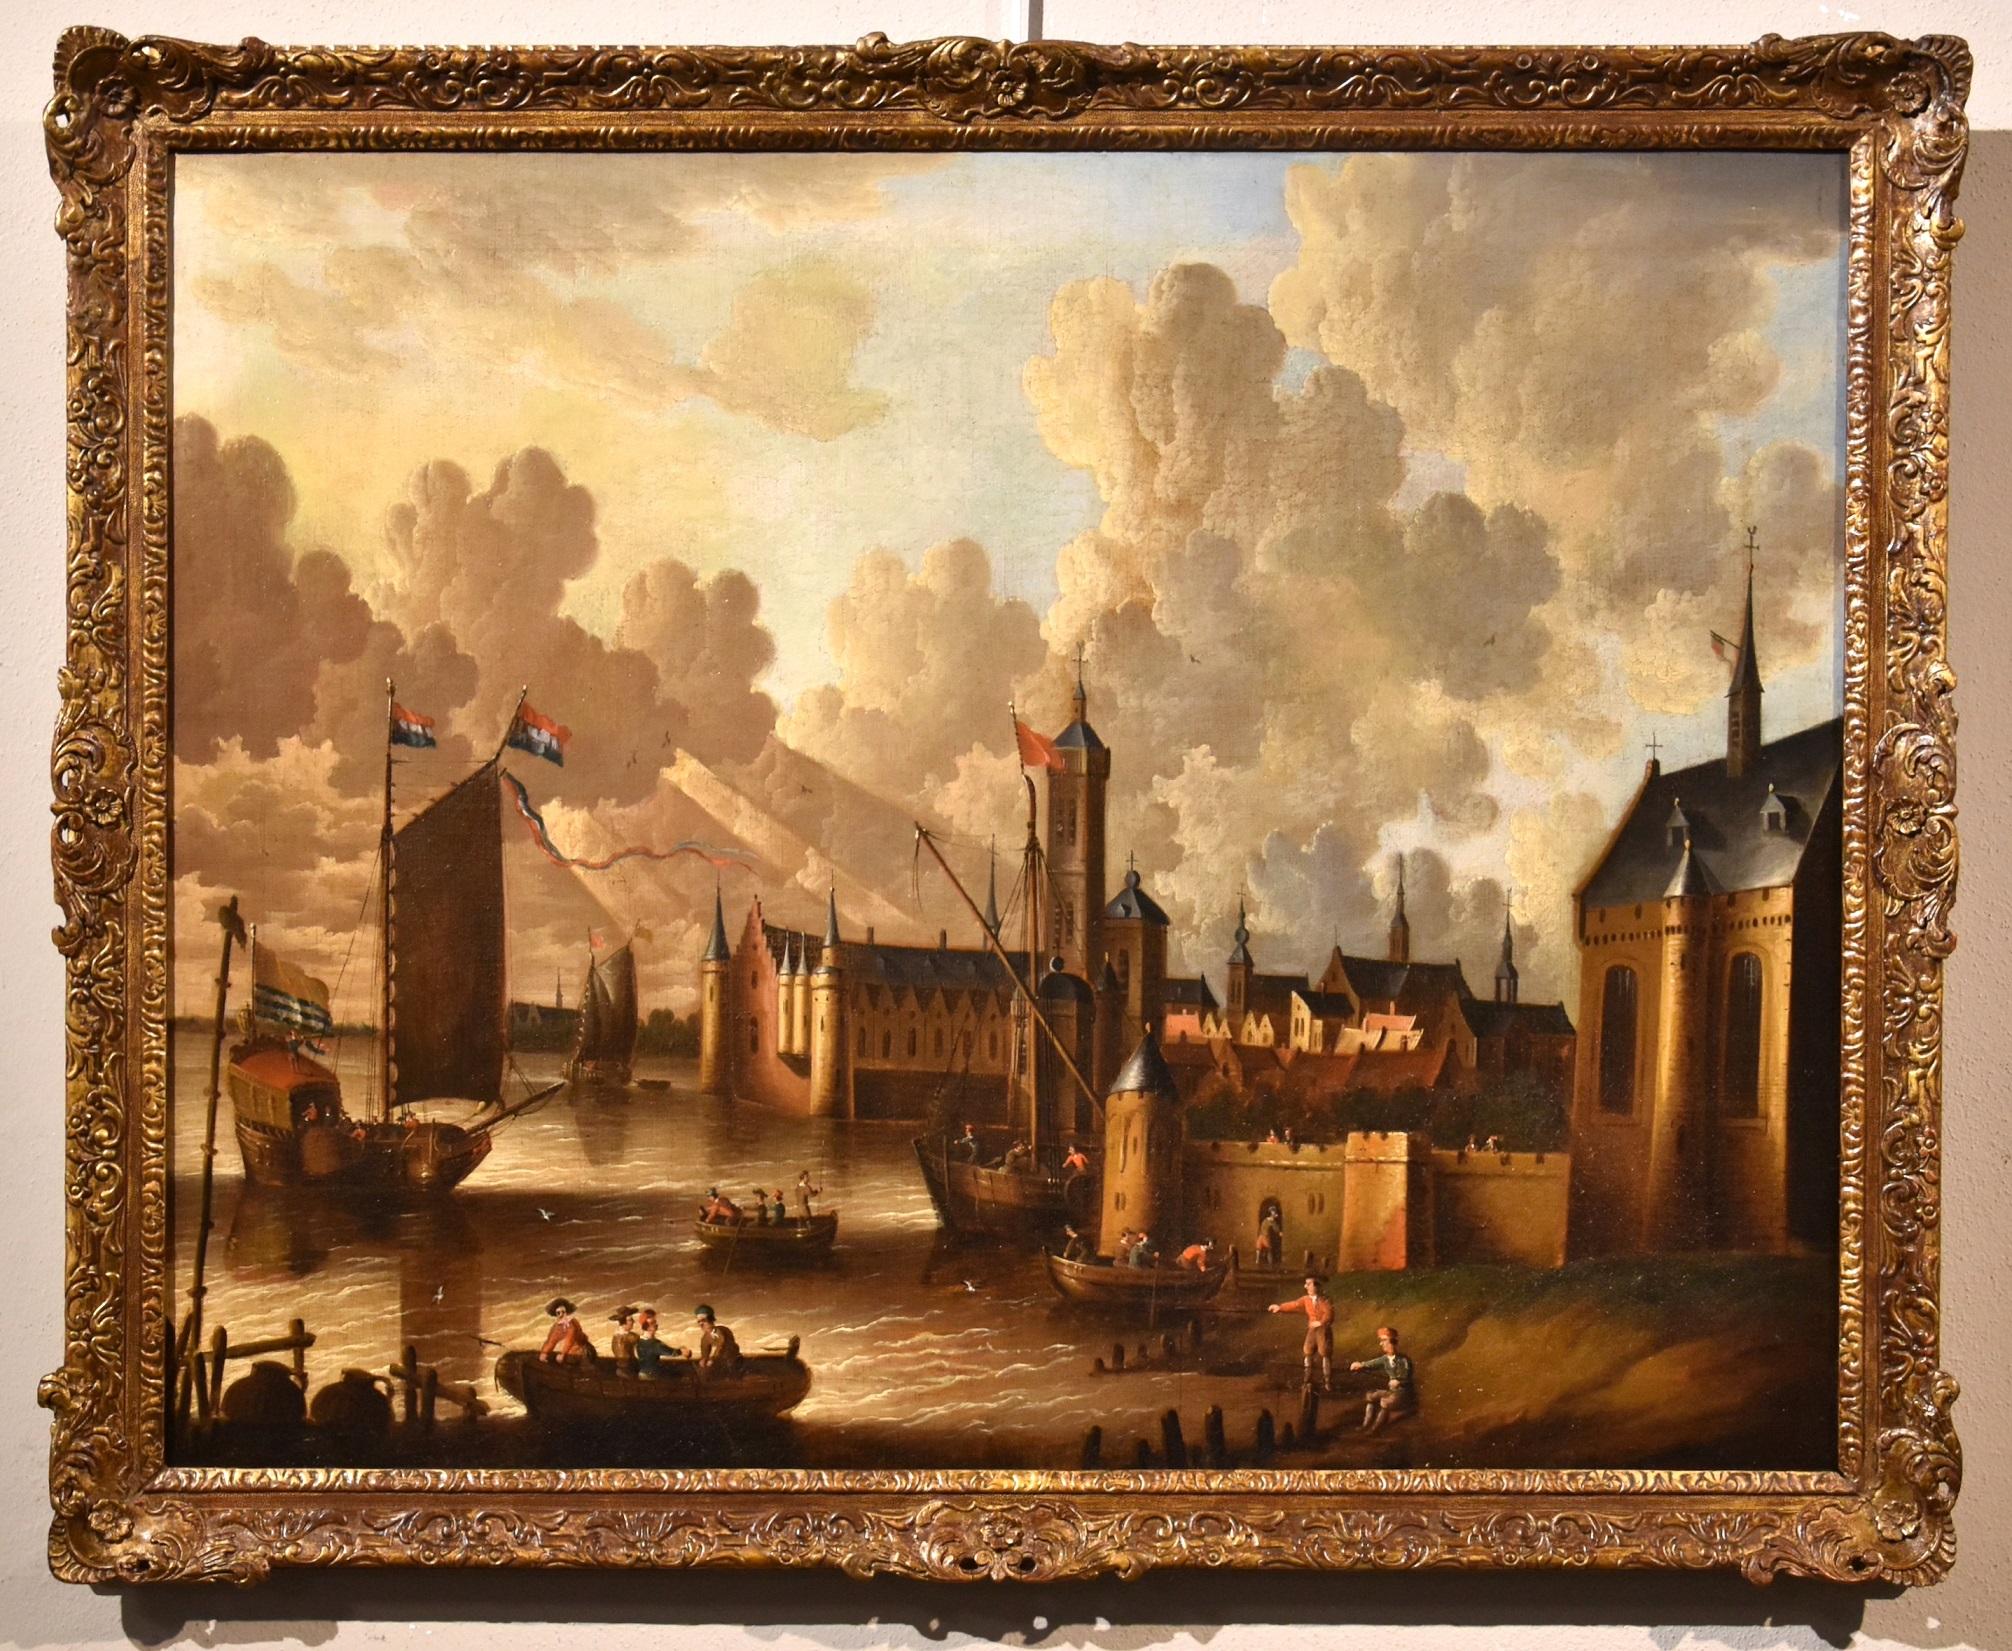 Landscape Marina See Van Der Velde Paint Oil on canvas Old master 17th Century